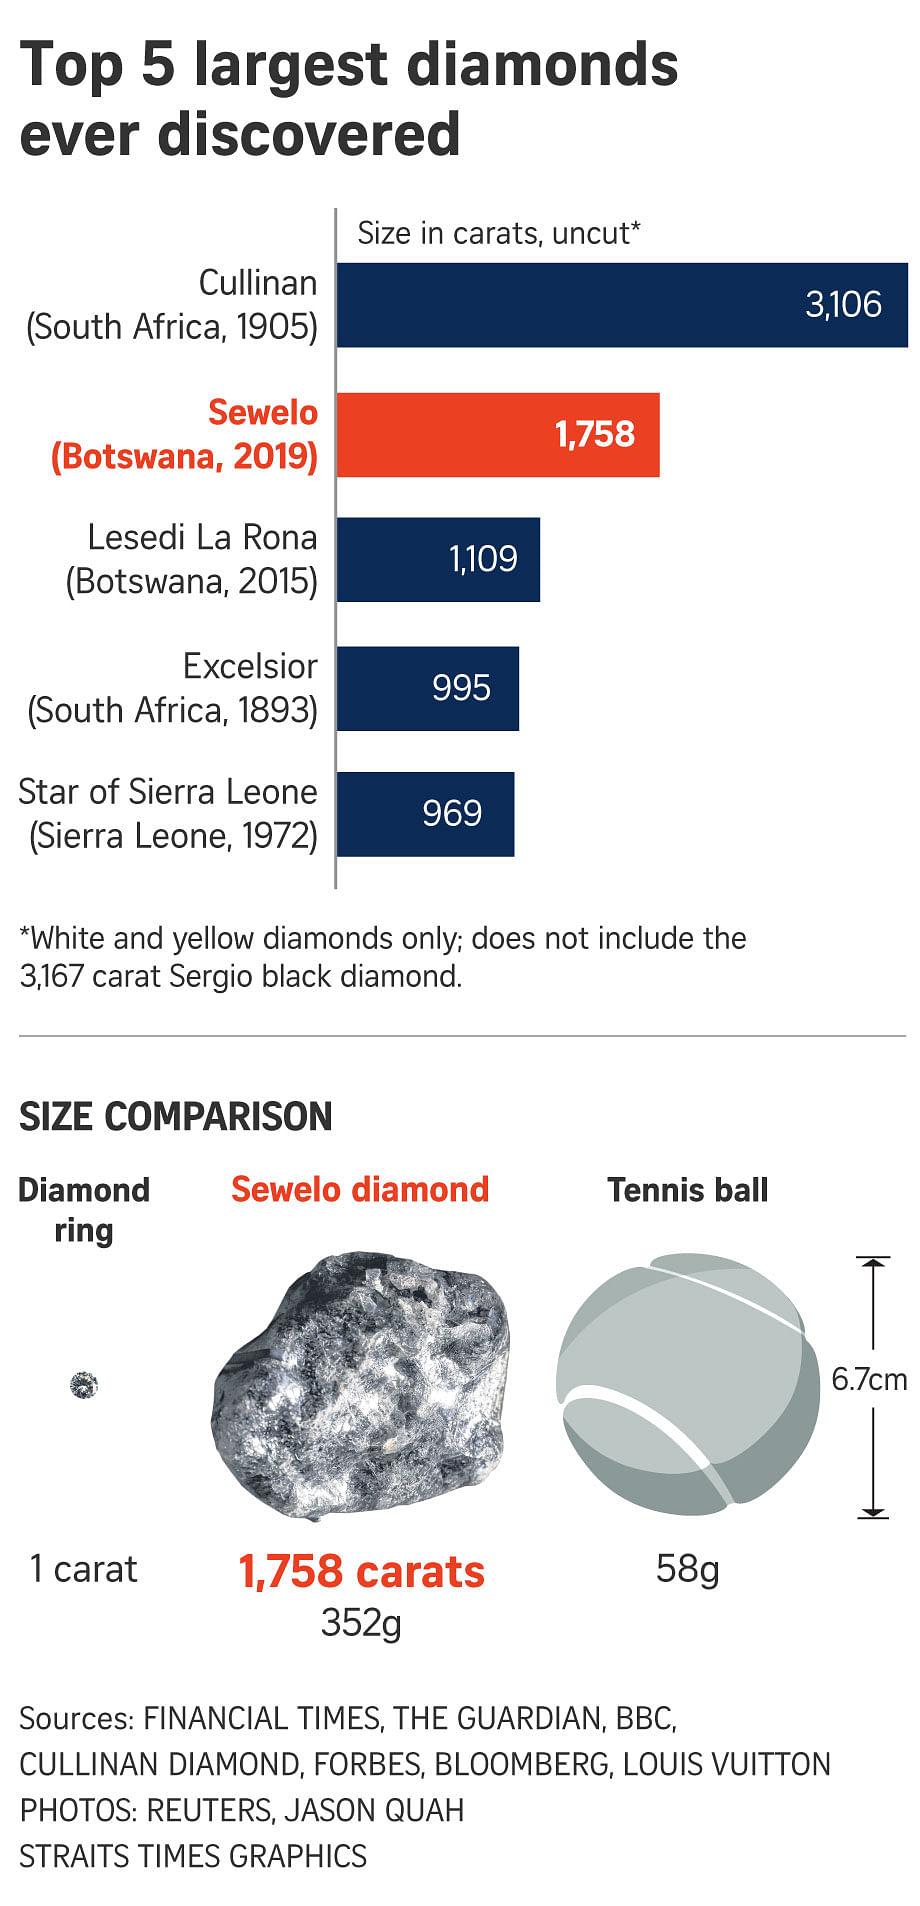 Louis Vuitton Acquires World's Second Largest Diamond